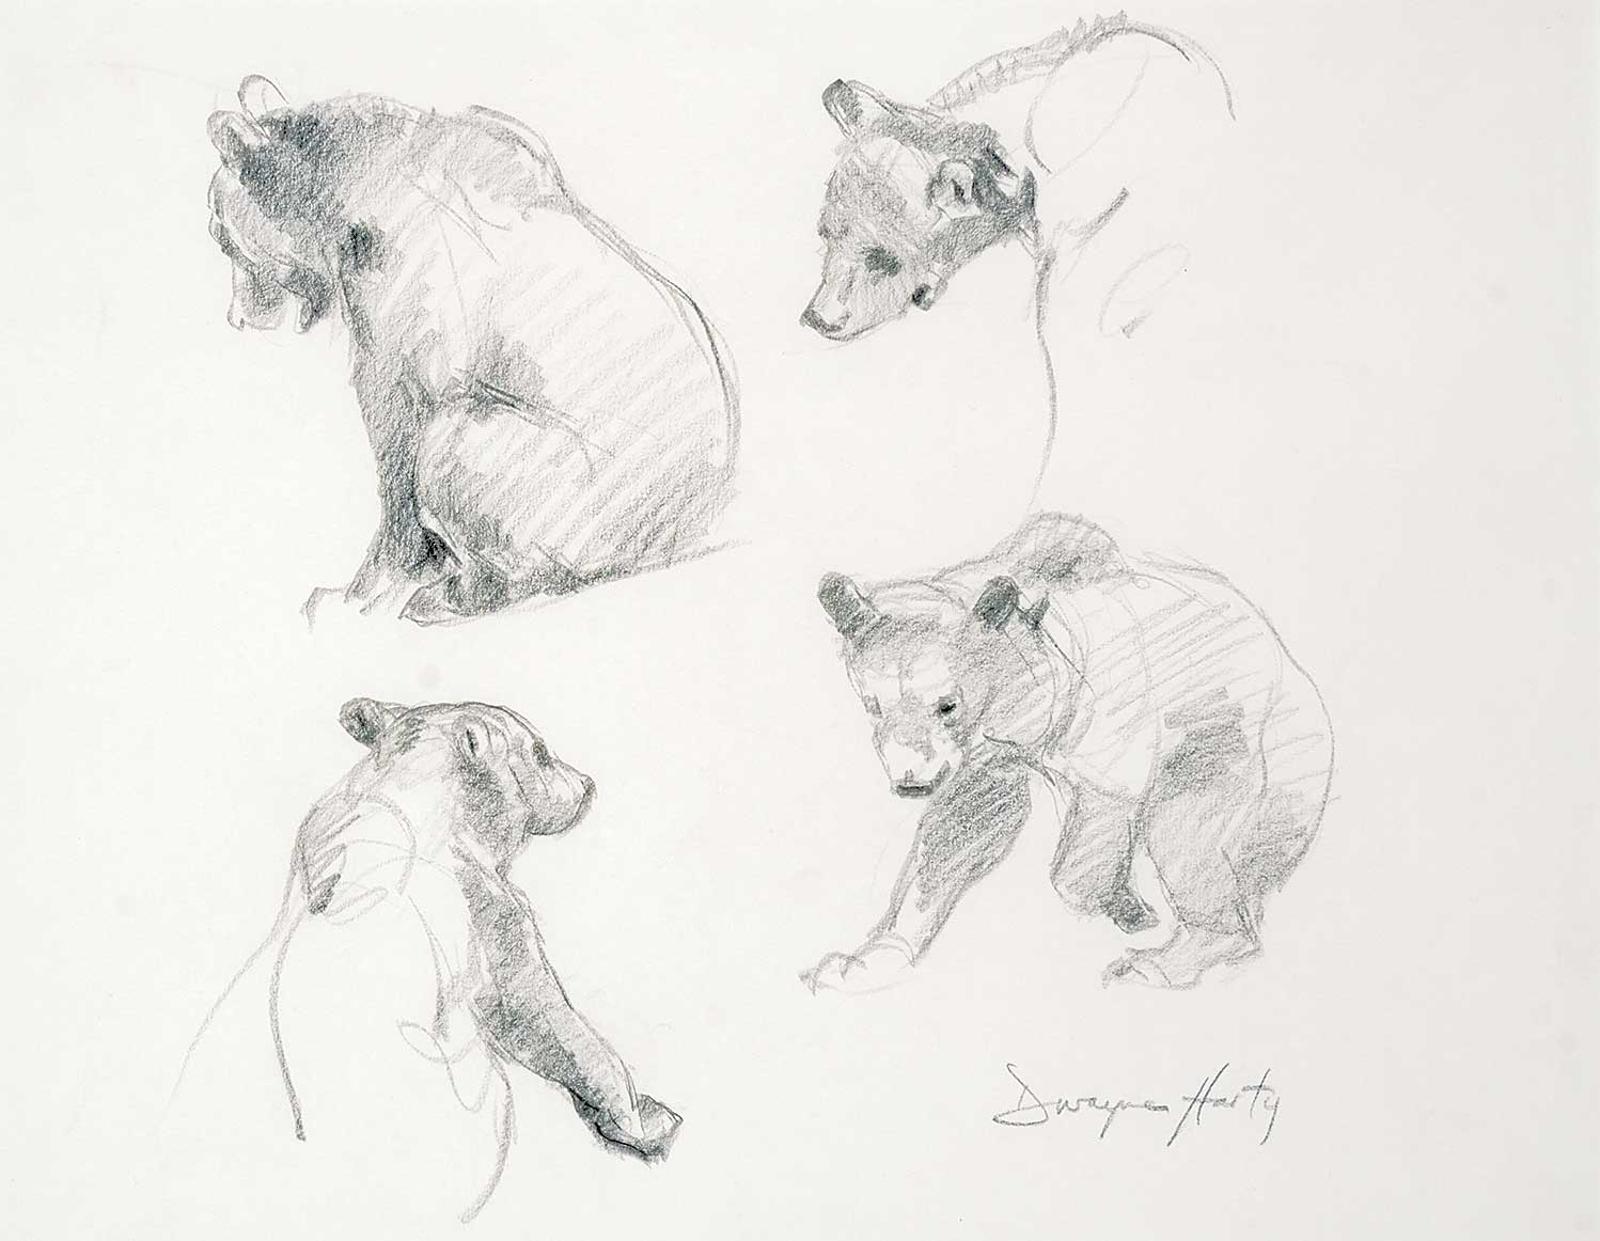 Dwayne Harty (1957) - Untitled - Bear Study